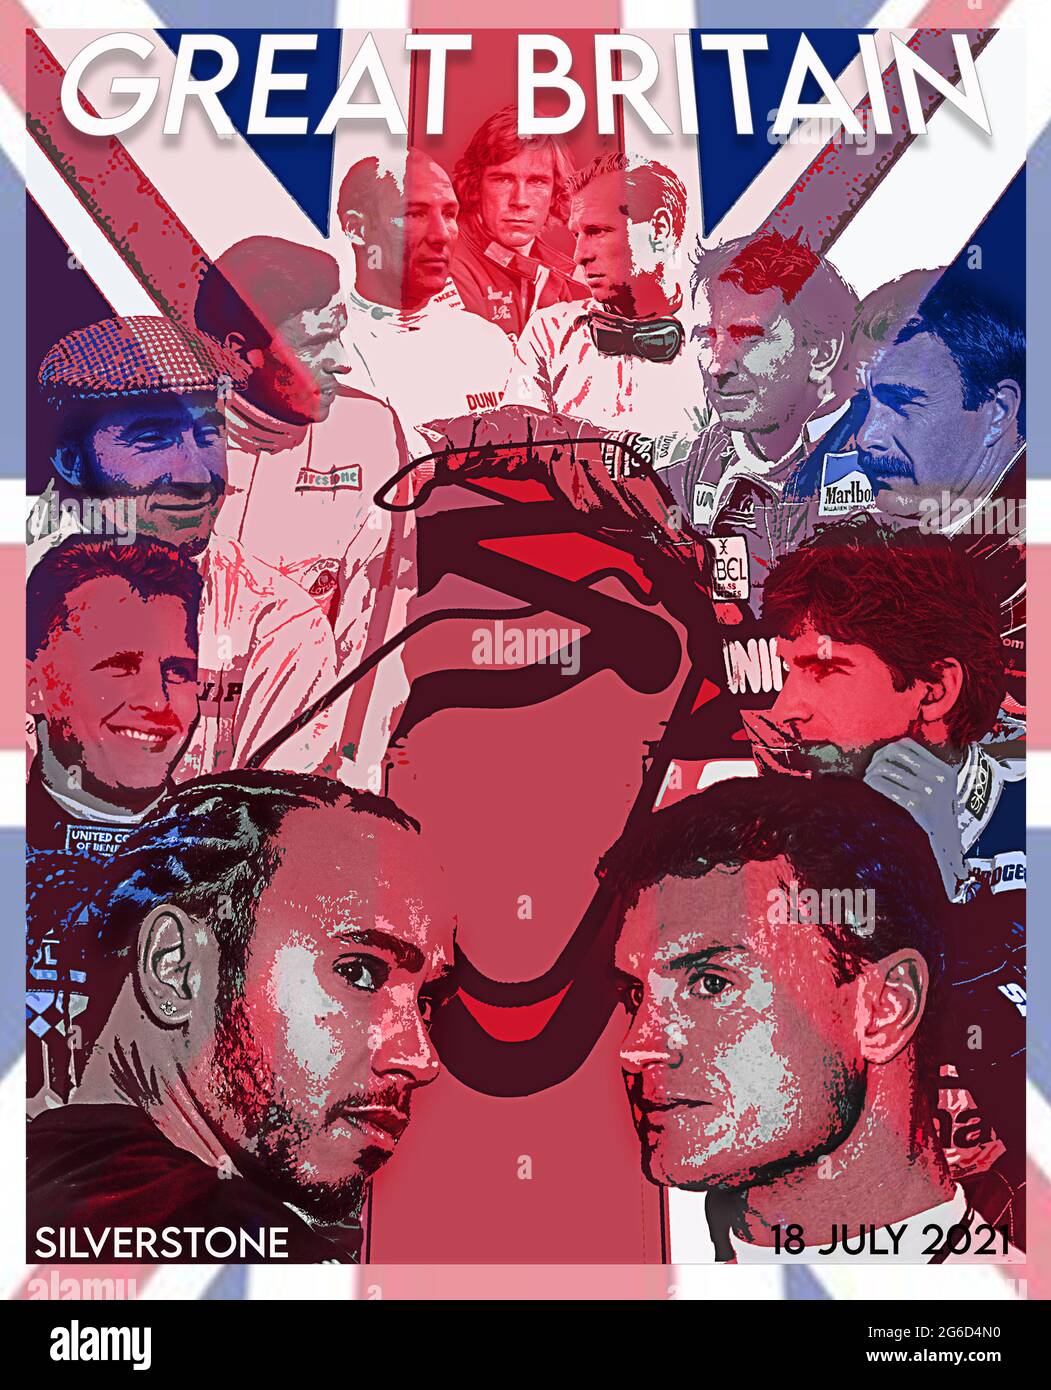 Britsig Grand Prix Race Weekend Poster Stock Photo